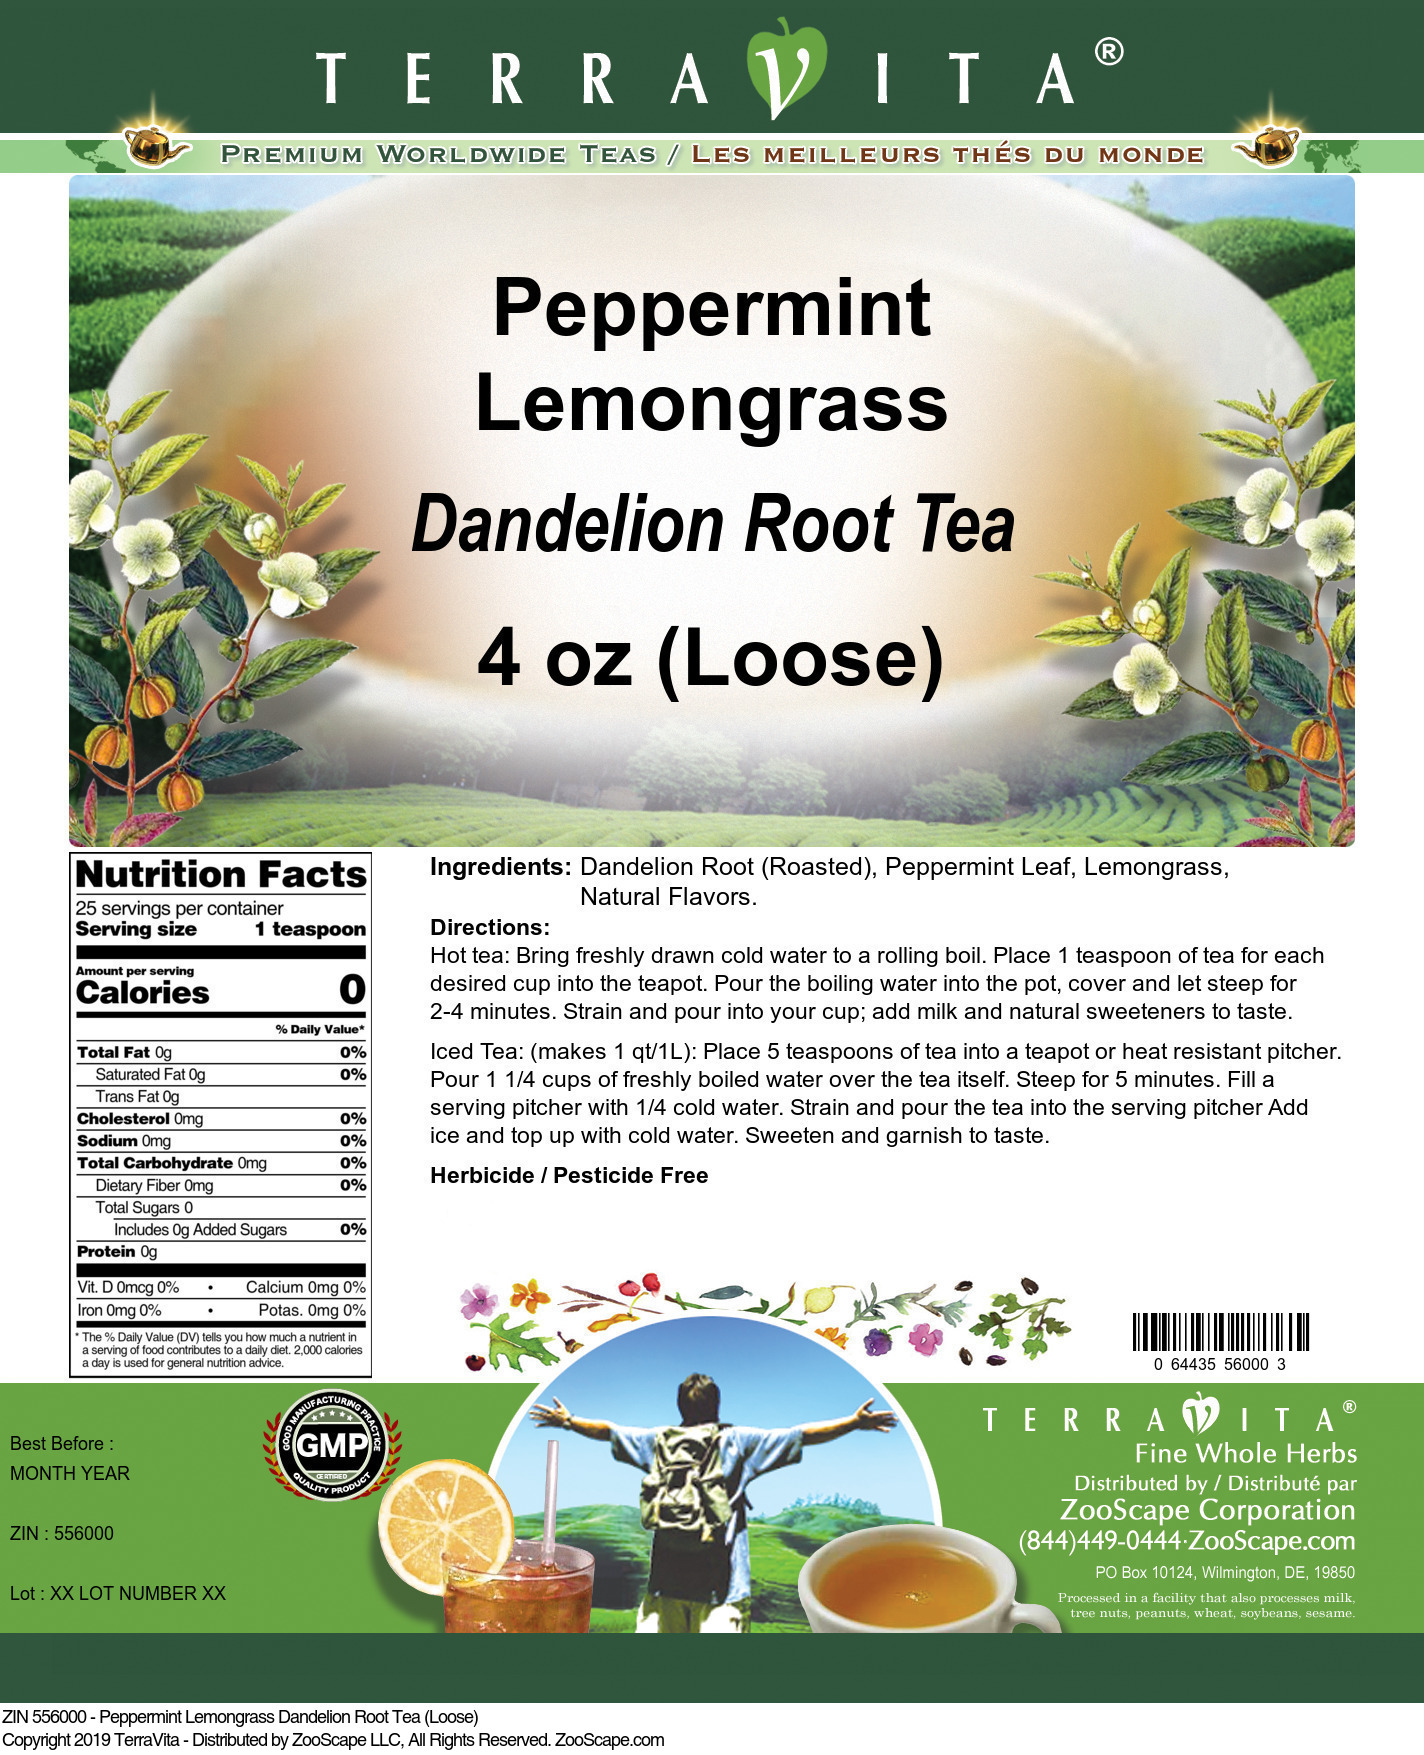 Peppermint Lemongrass Dandelion Root Tea (Loose) - Label